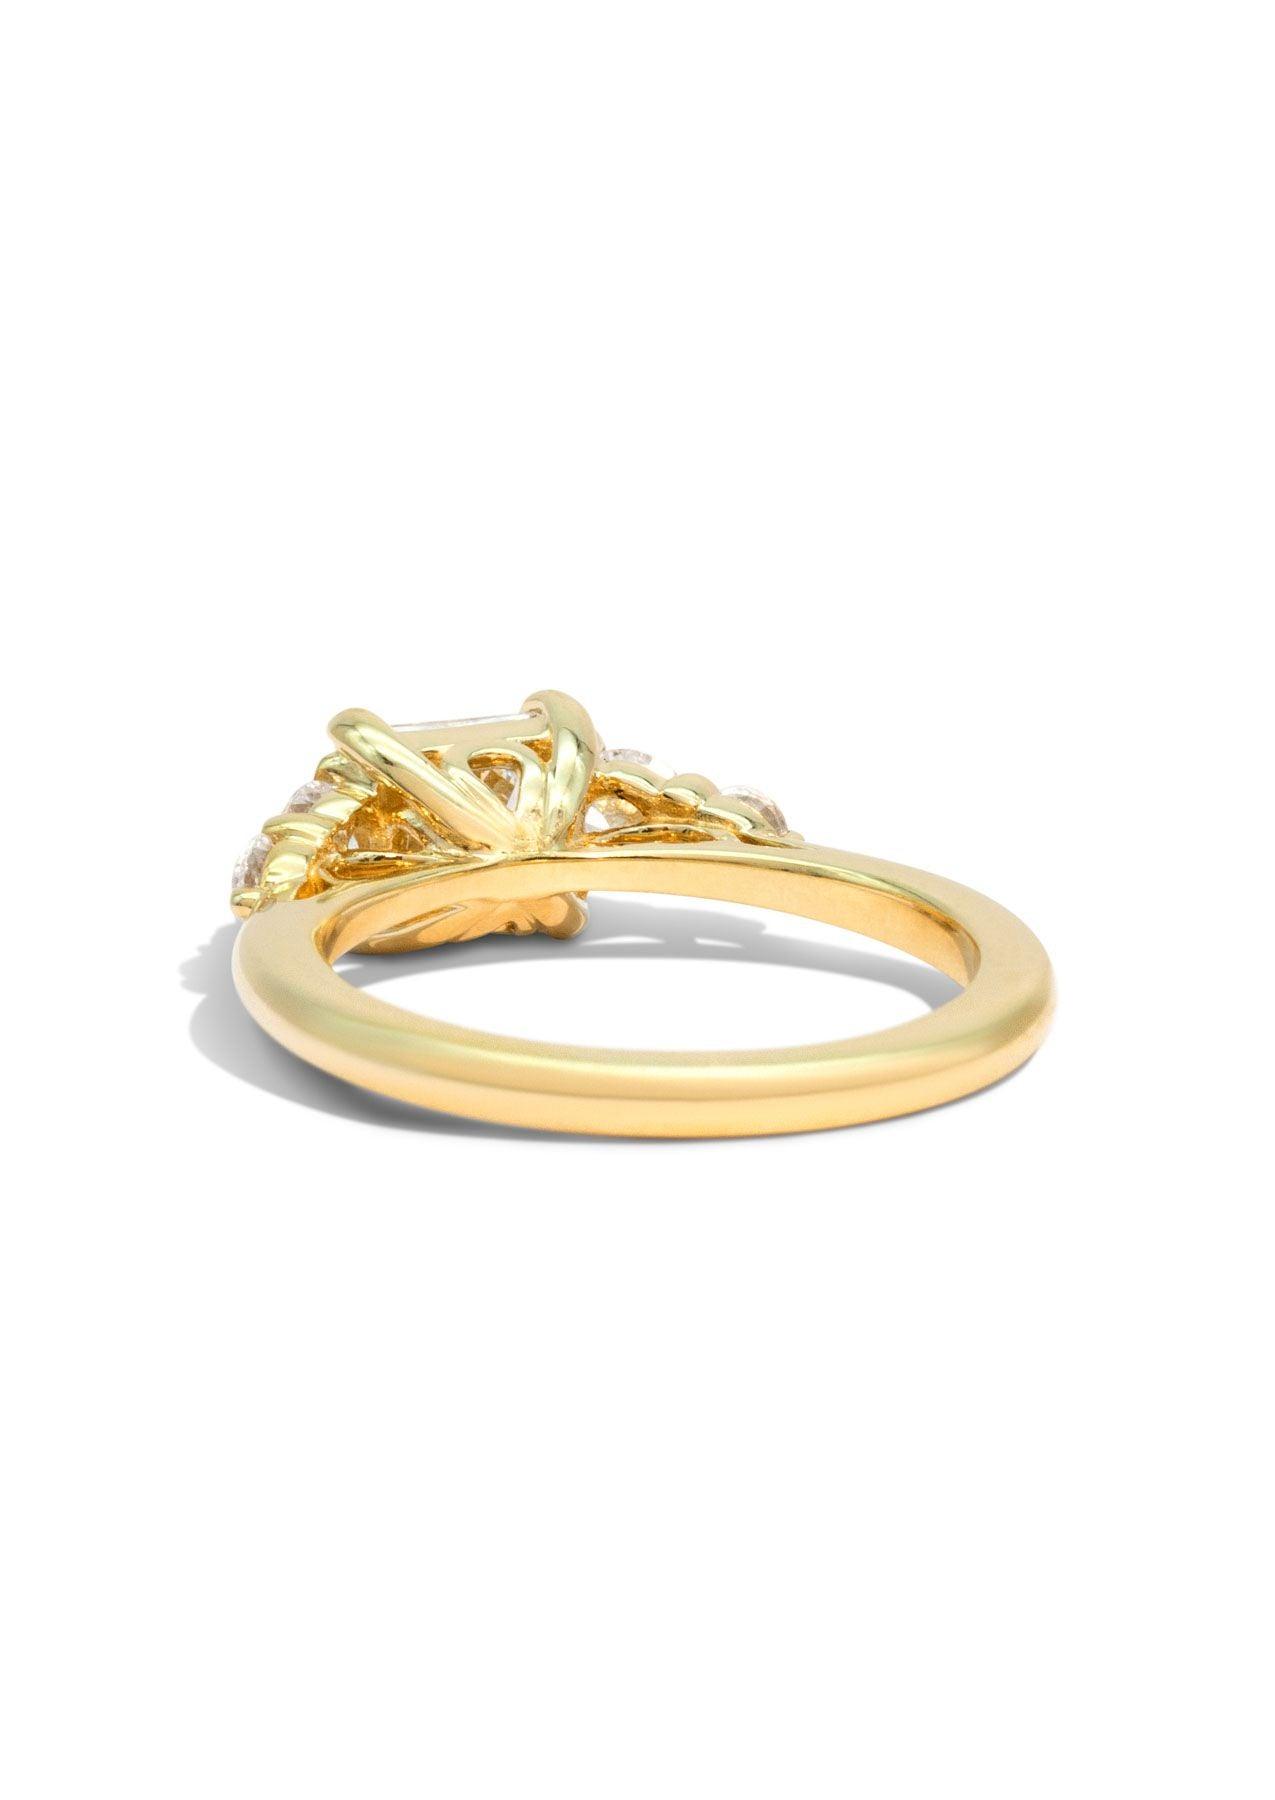 The Vera Yellow Gold Cultured Diamond Ring - Molten Store